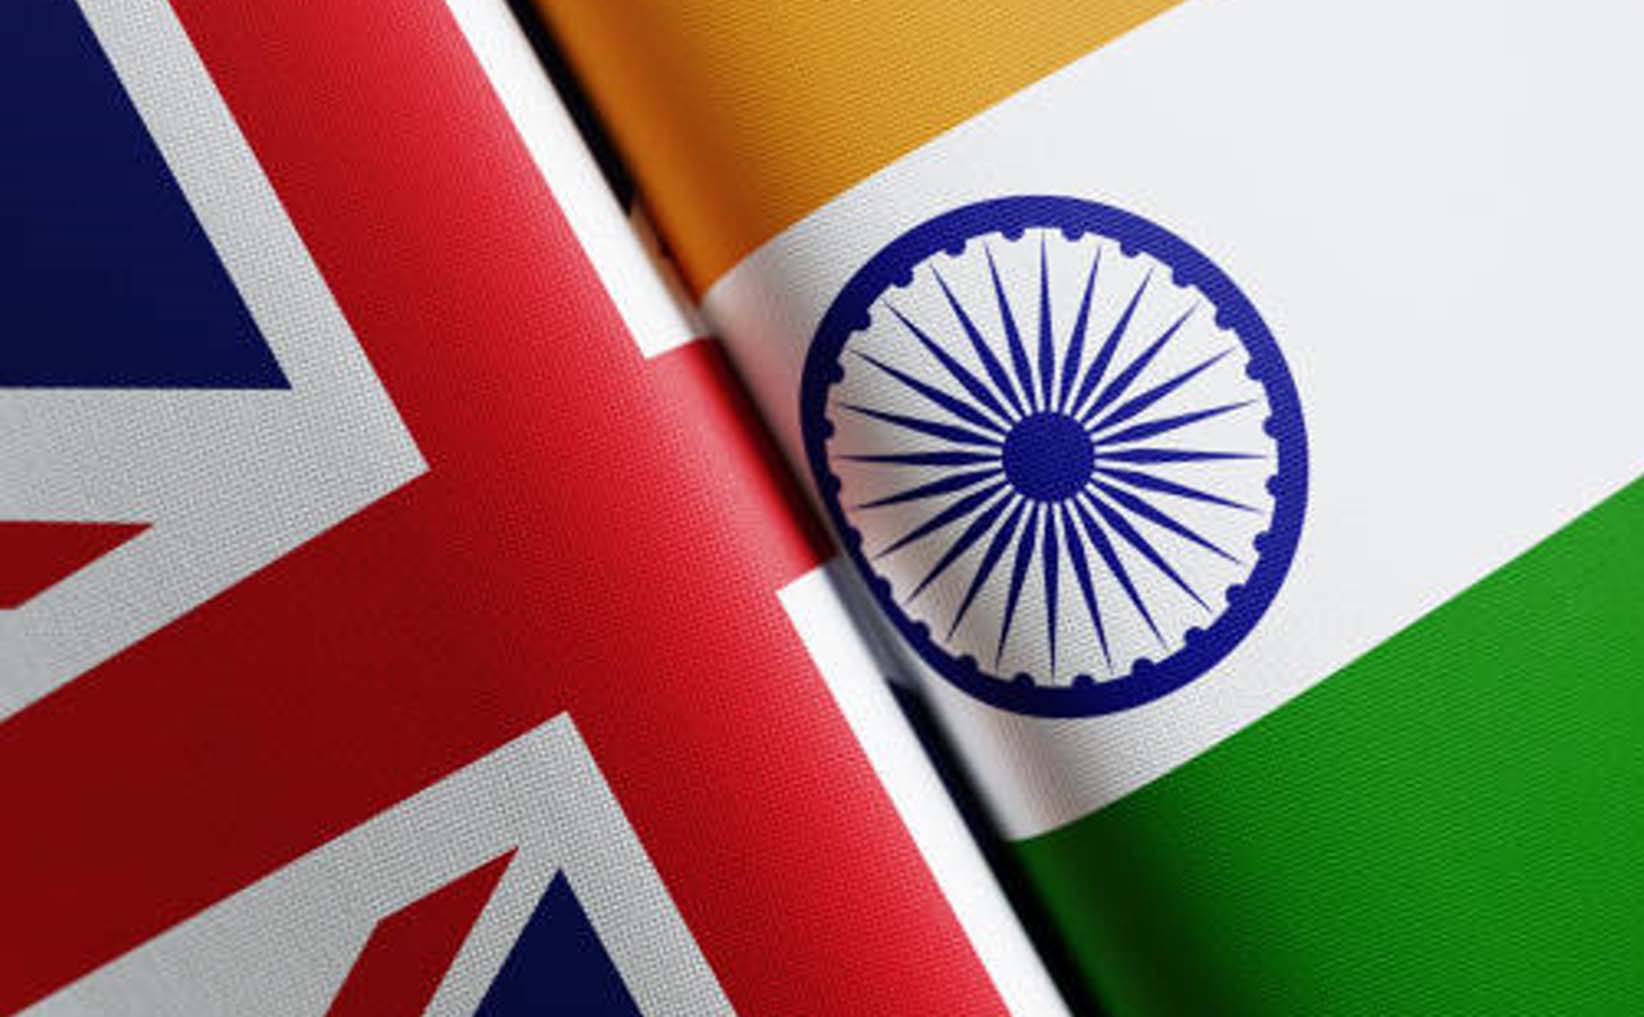 UK & India flags